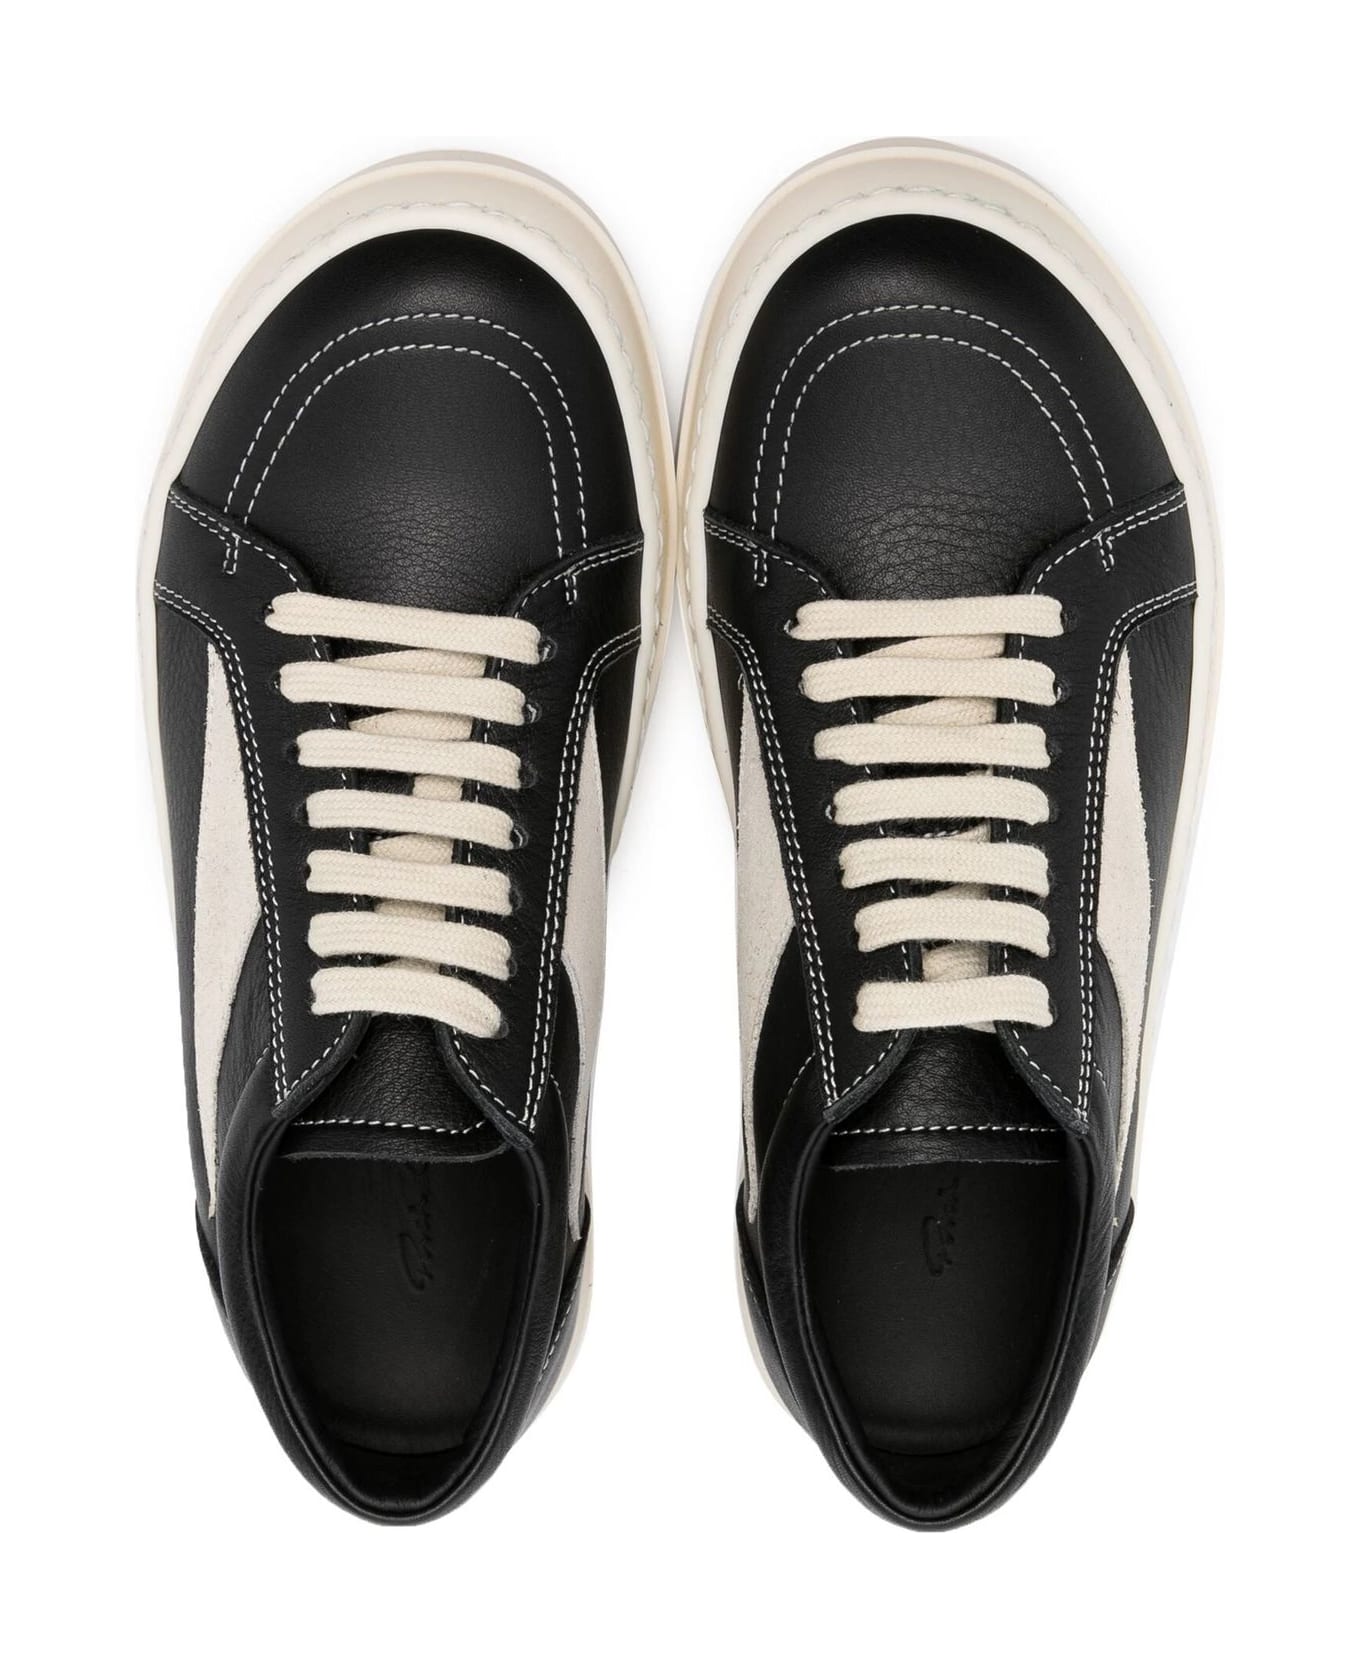 Rick Owens Black Leather Sneakers - Nero